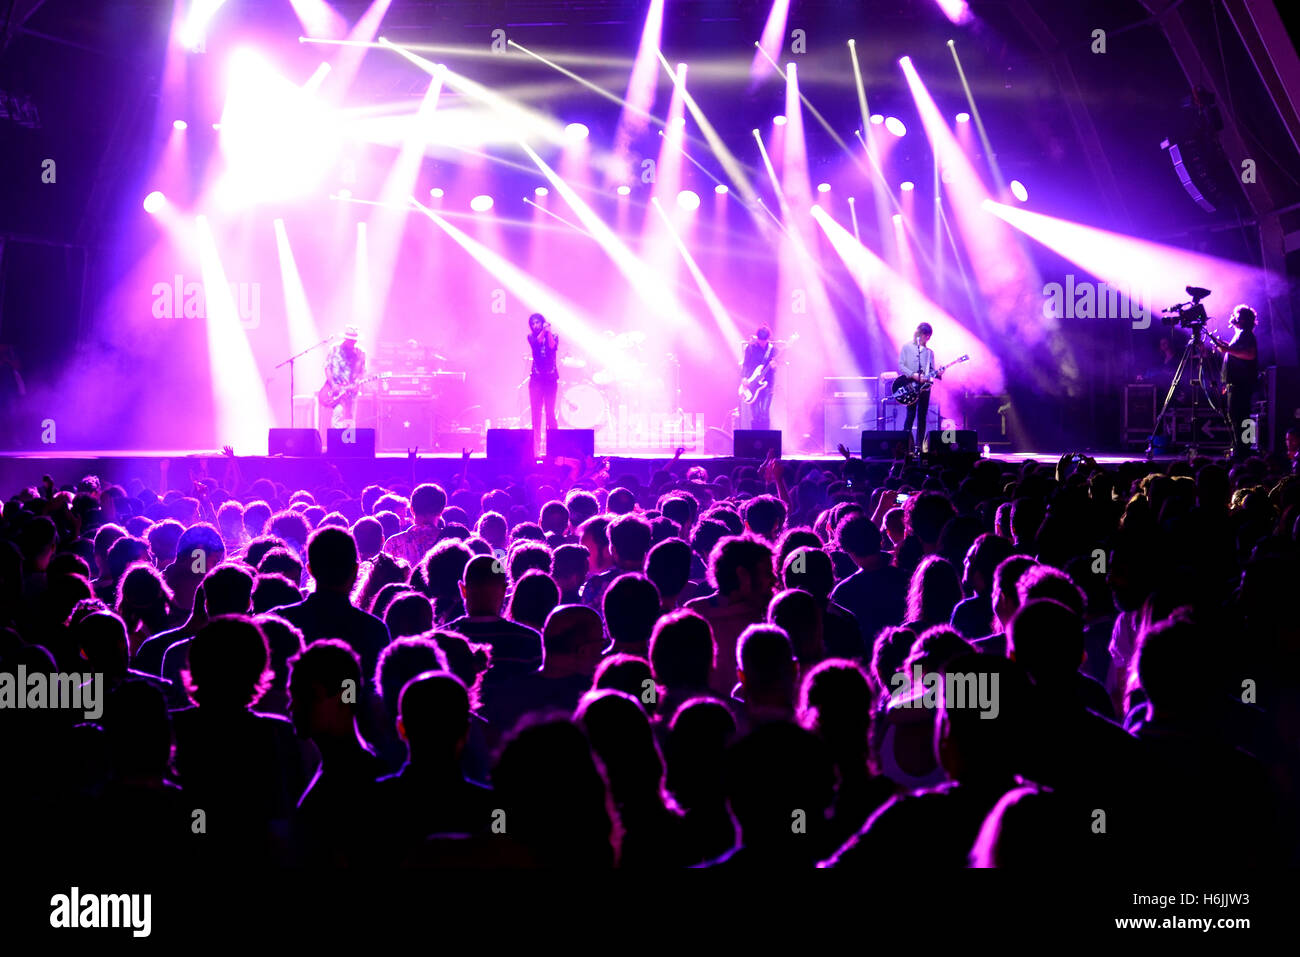 BARCELONA - JUL 4: Crowd in a concert at Vida Festival on July 4, 2015 in Barcelona, Spain. Stock Photo